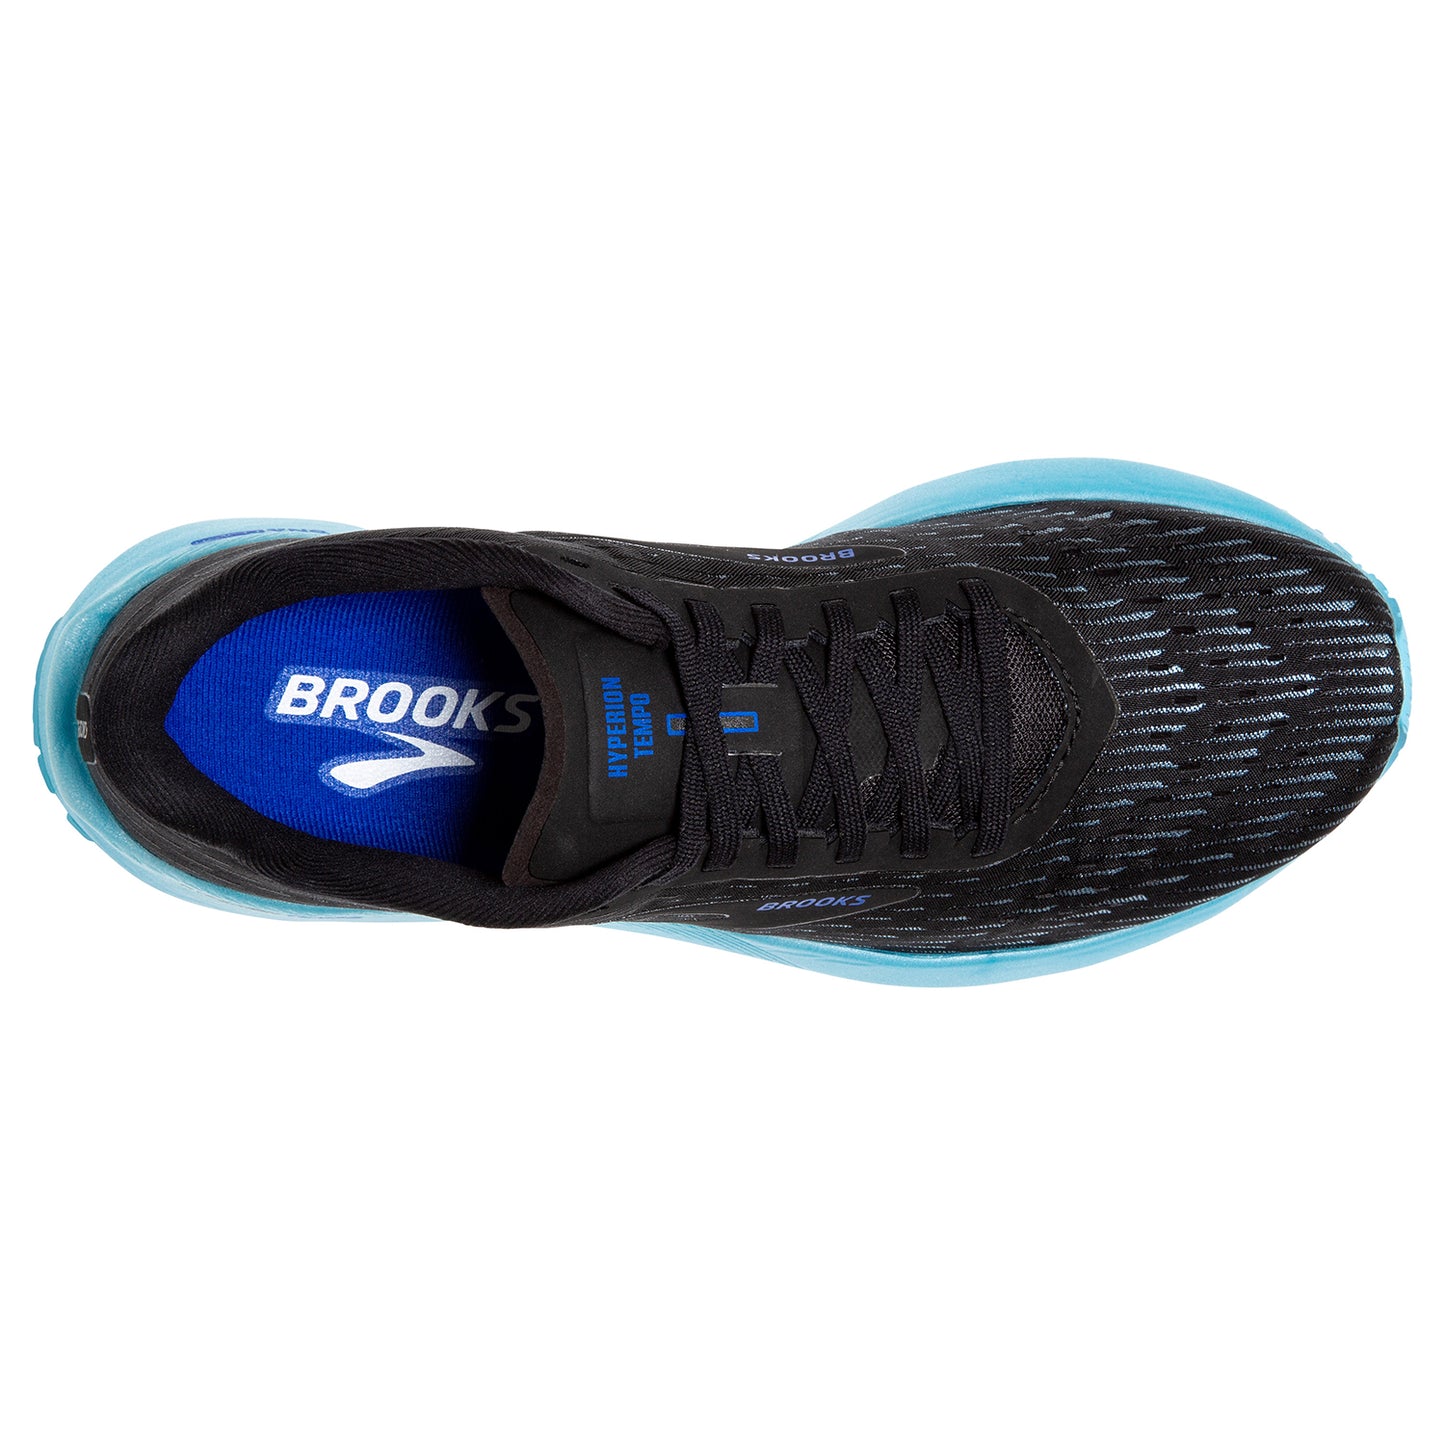 Men's Hyperion Tempo Running Shoe - Black/Iced Aqua/Blue - Regular (D)